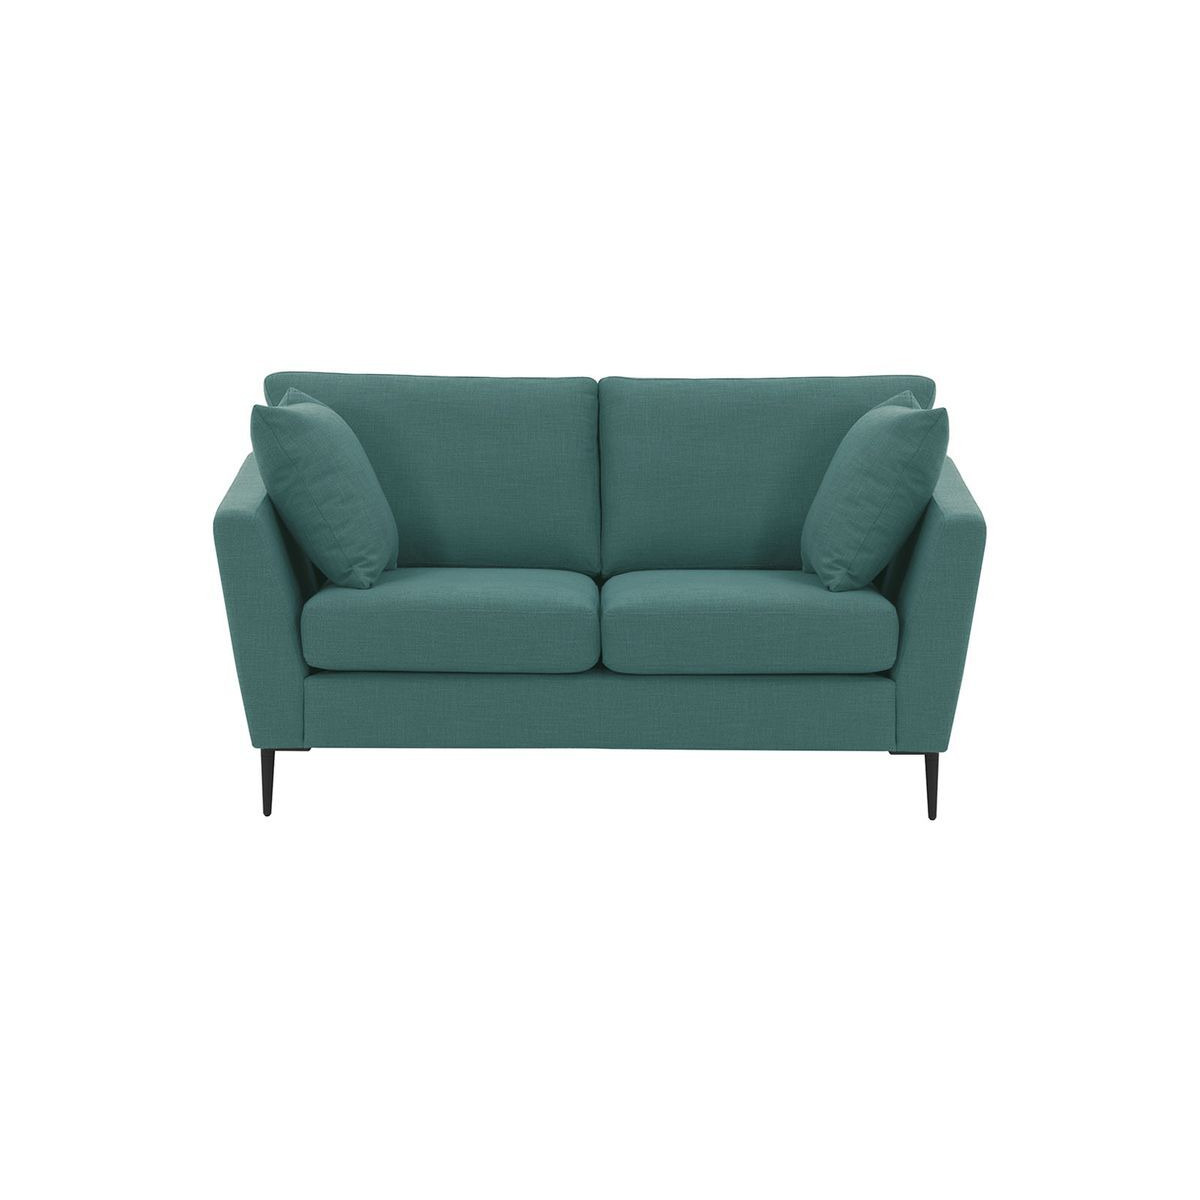 Imani 2 Seater Sofa, turquoise - image 1